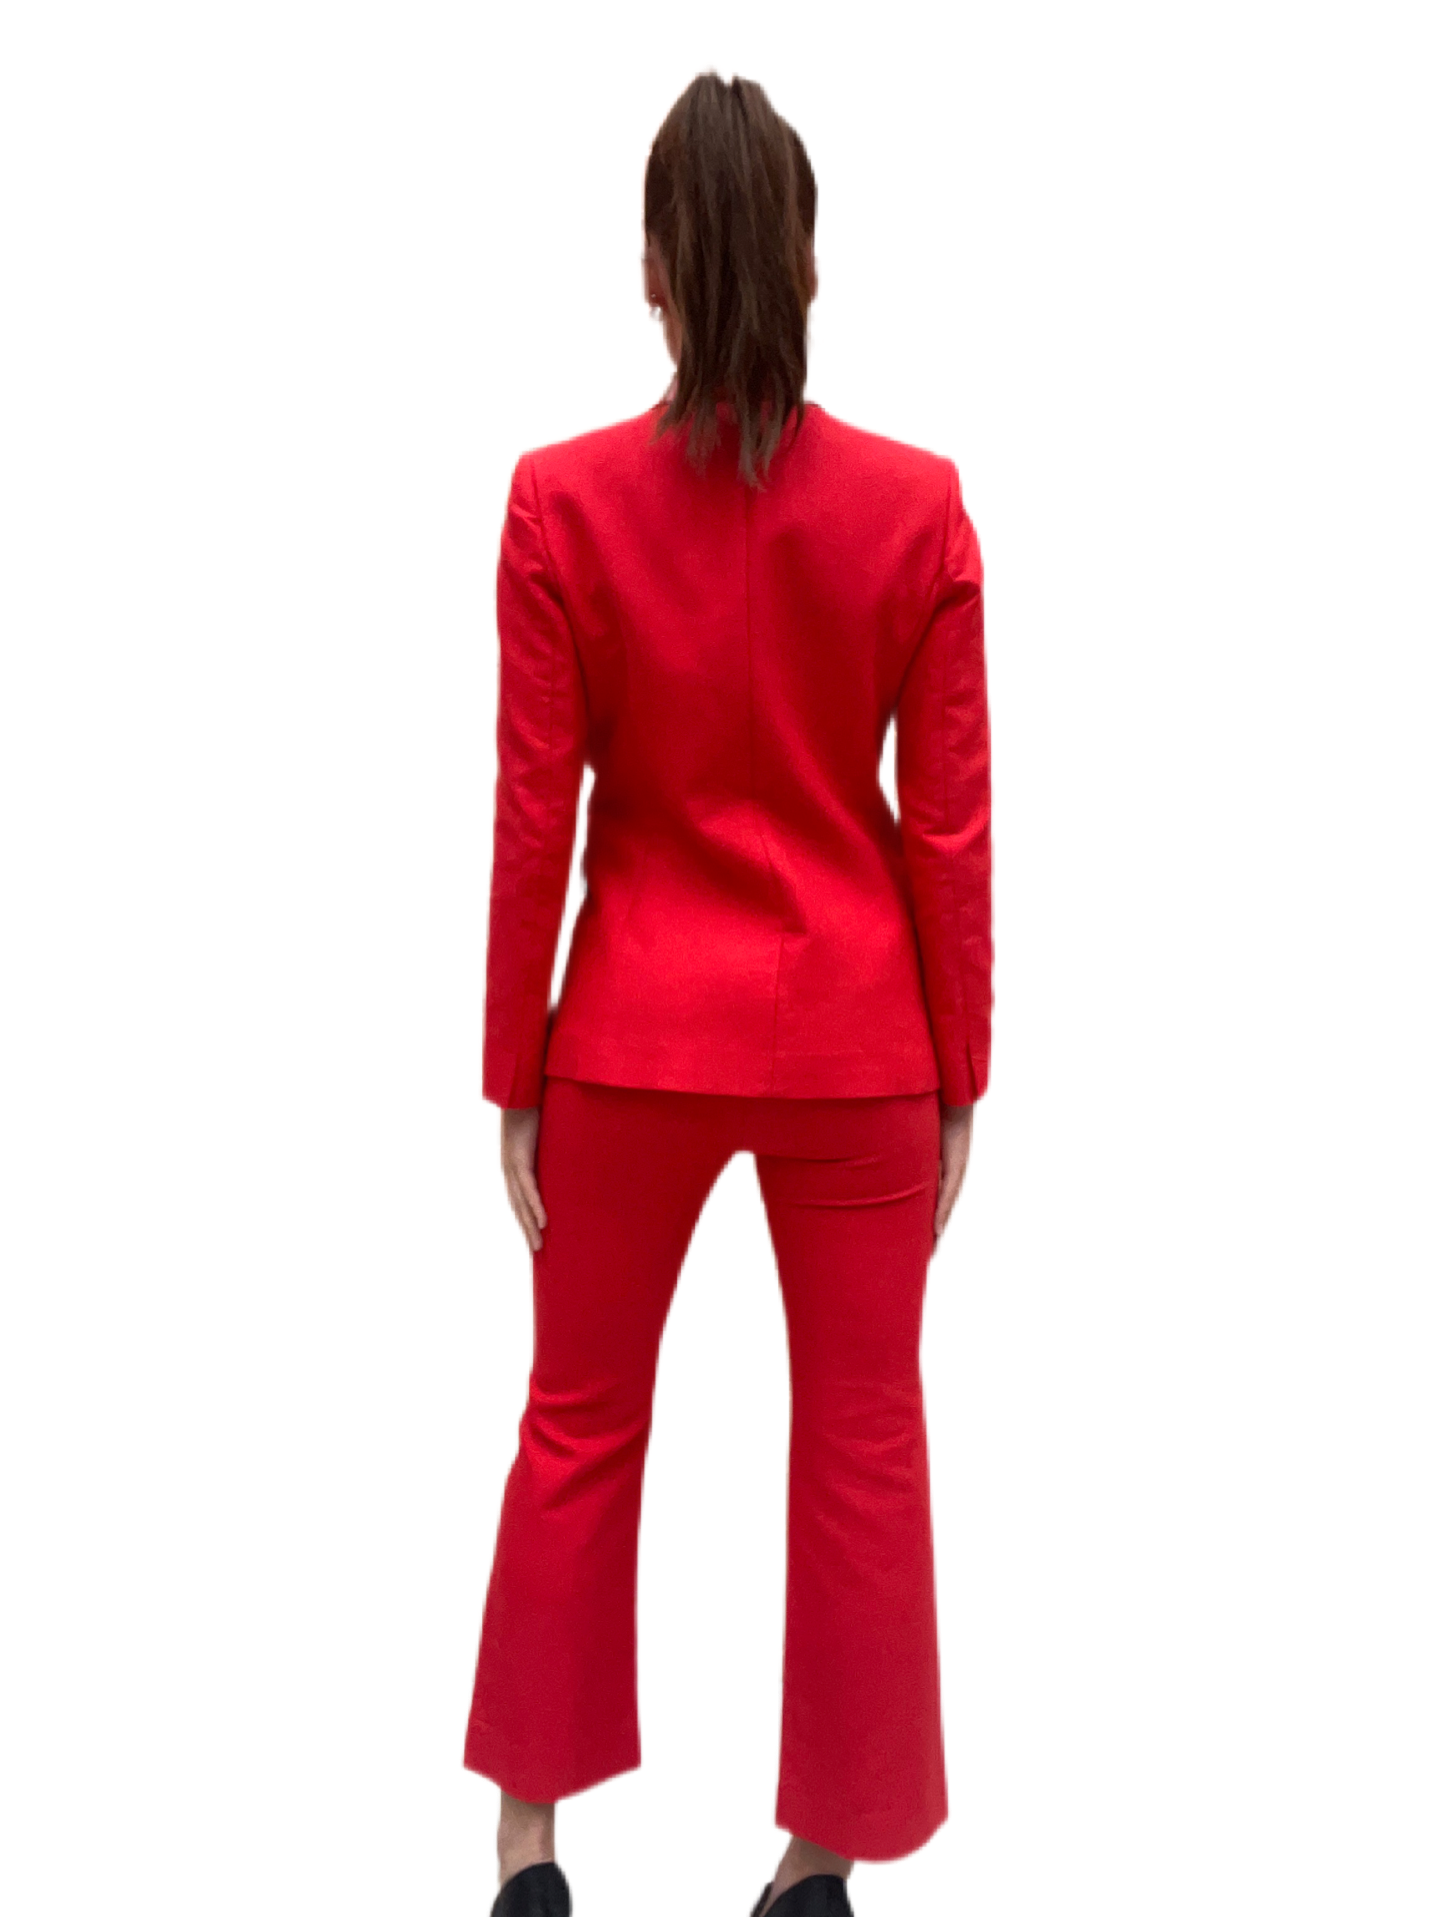 Sandro Red Pants & Blazer Suit Set. Size: 36